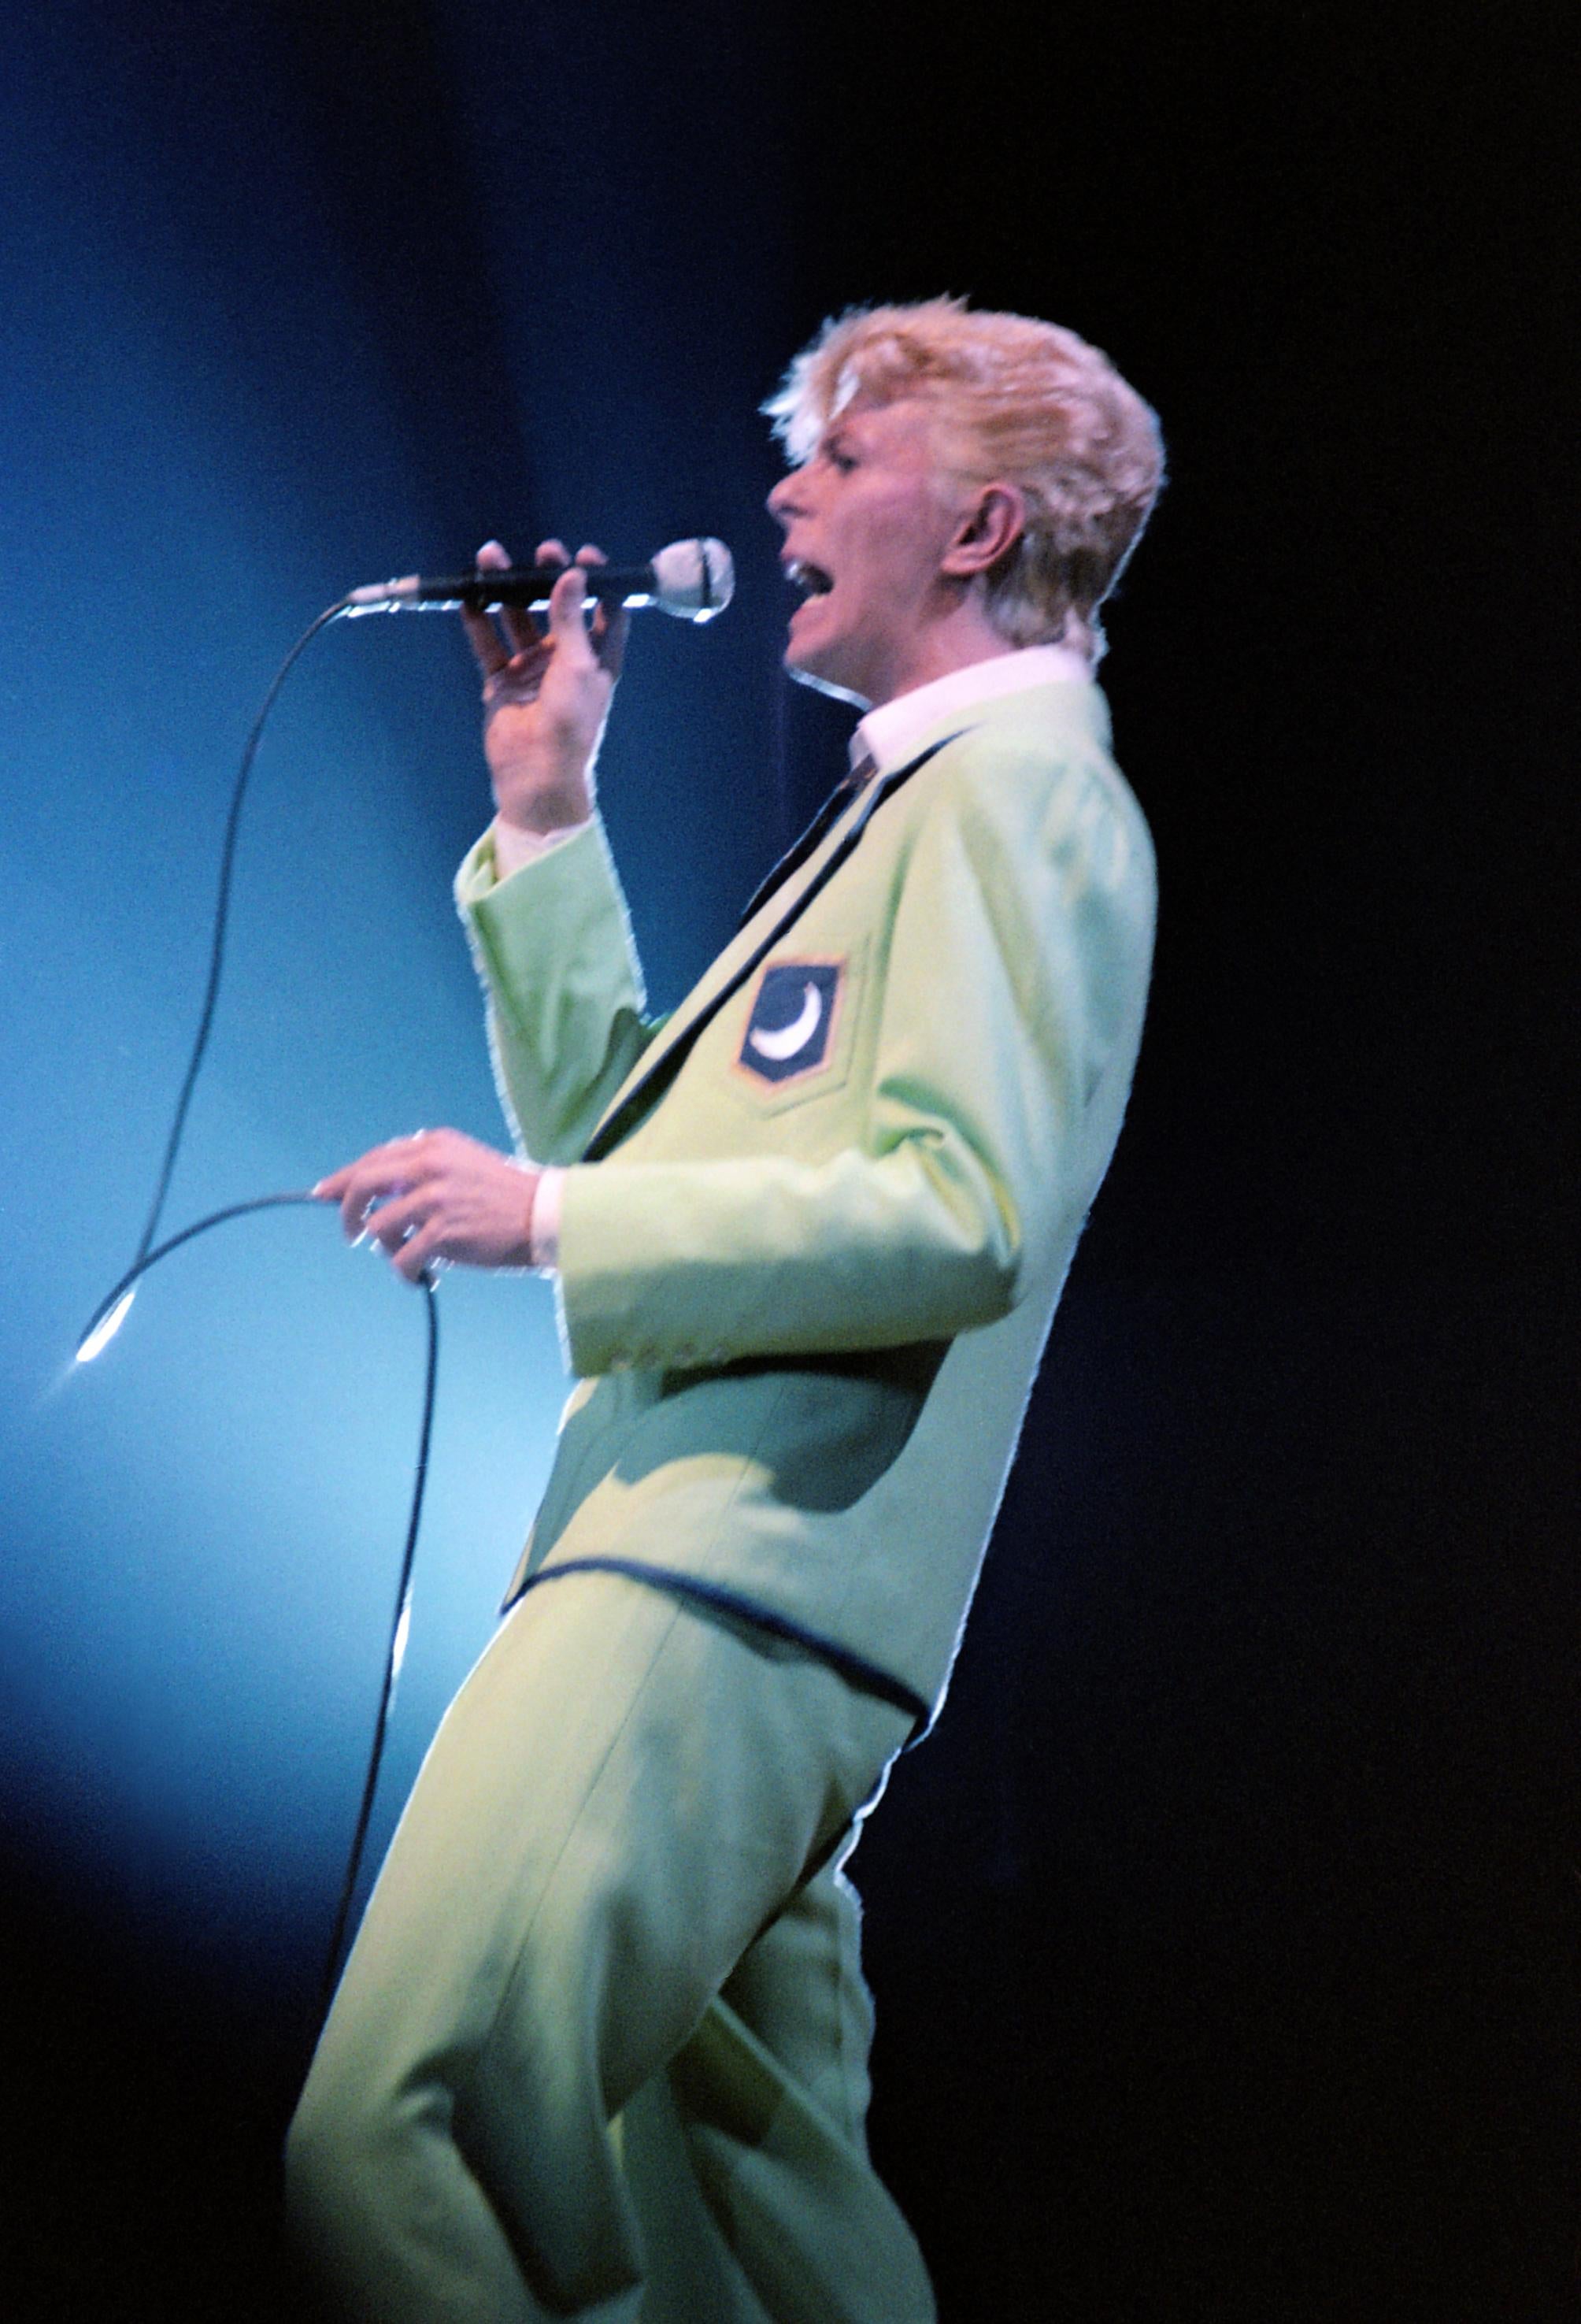 Tony Defilippis Portrait Photograph - David Bowie Performing in His "Serious Moonlight" Tour Fine Art Print